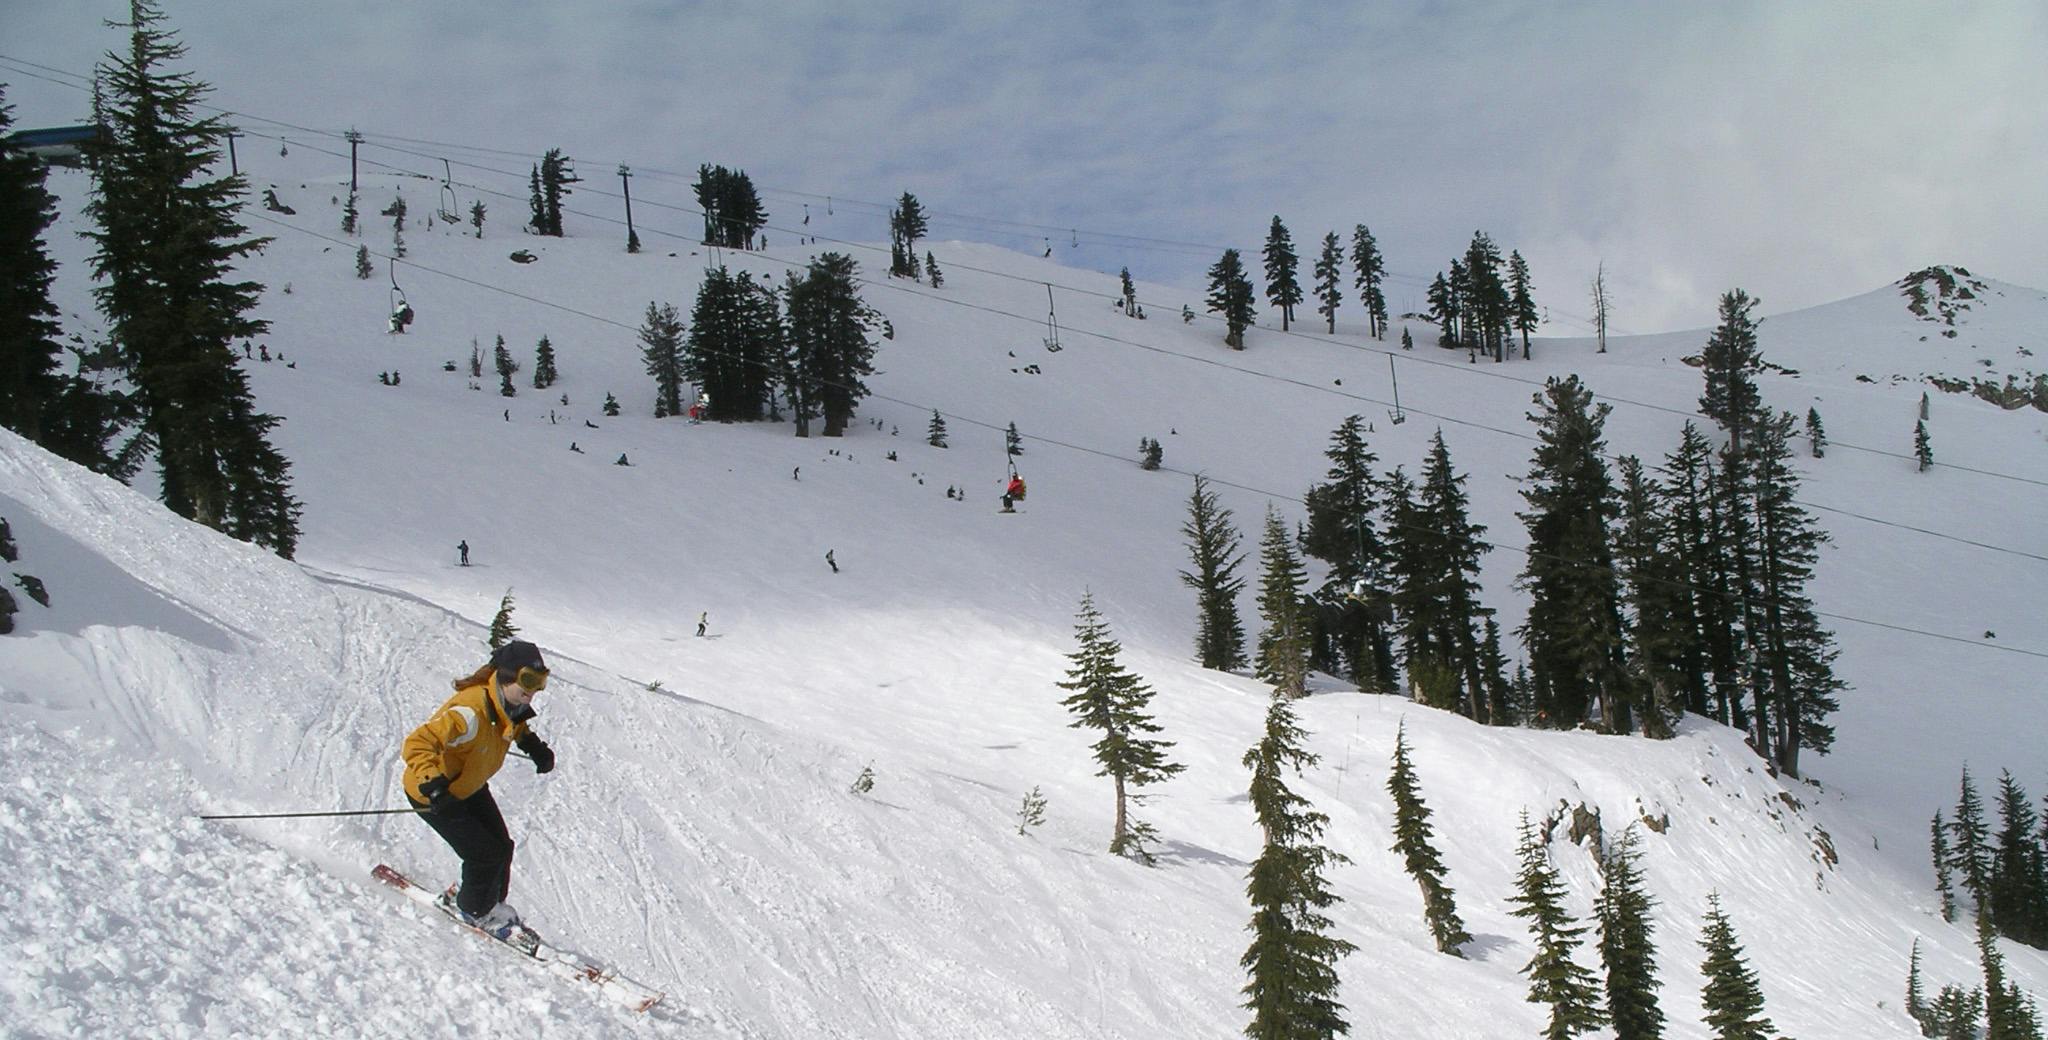 Skiing down Alpine Meadow slope